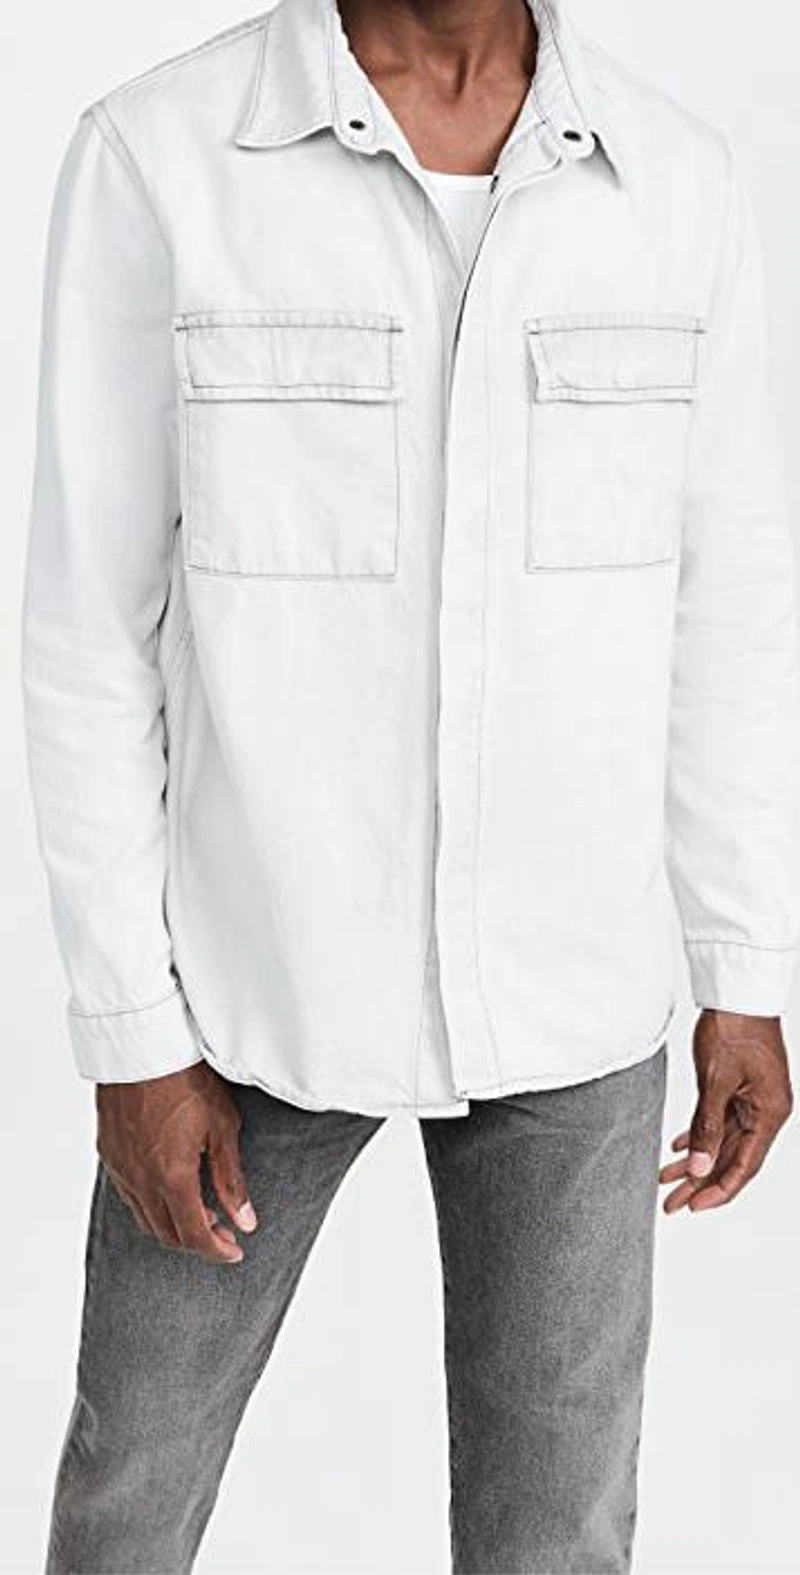 shopbop.com's Posts | 搭配: Ksubi Men's Snakebite Cloud Atlas Sport Shirt In Grey；Levi's 501 93 Straight Leg Jeans；Polo Ralph Lauren Classic Fit 5 Pack Tanks In White